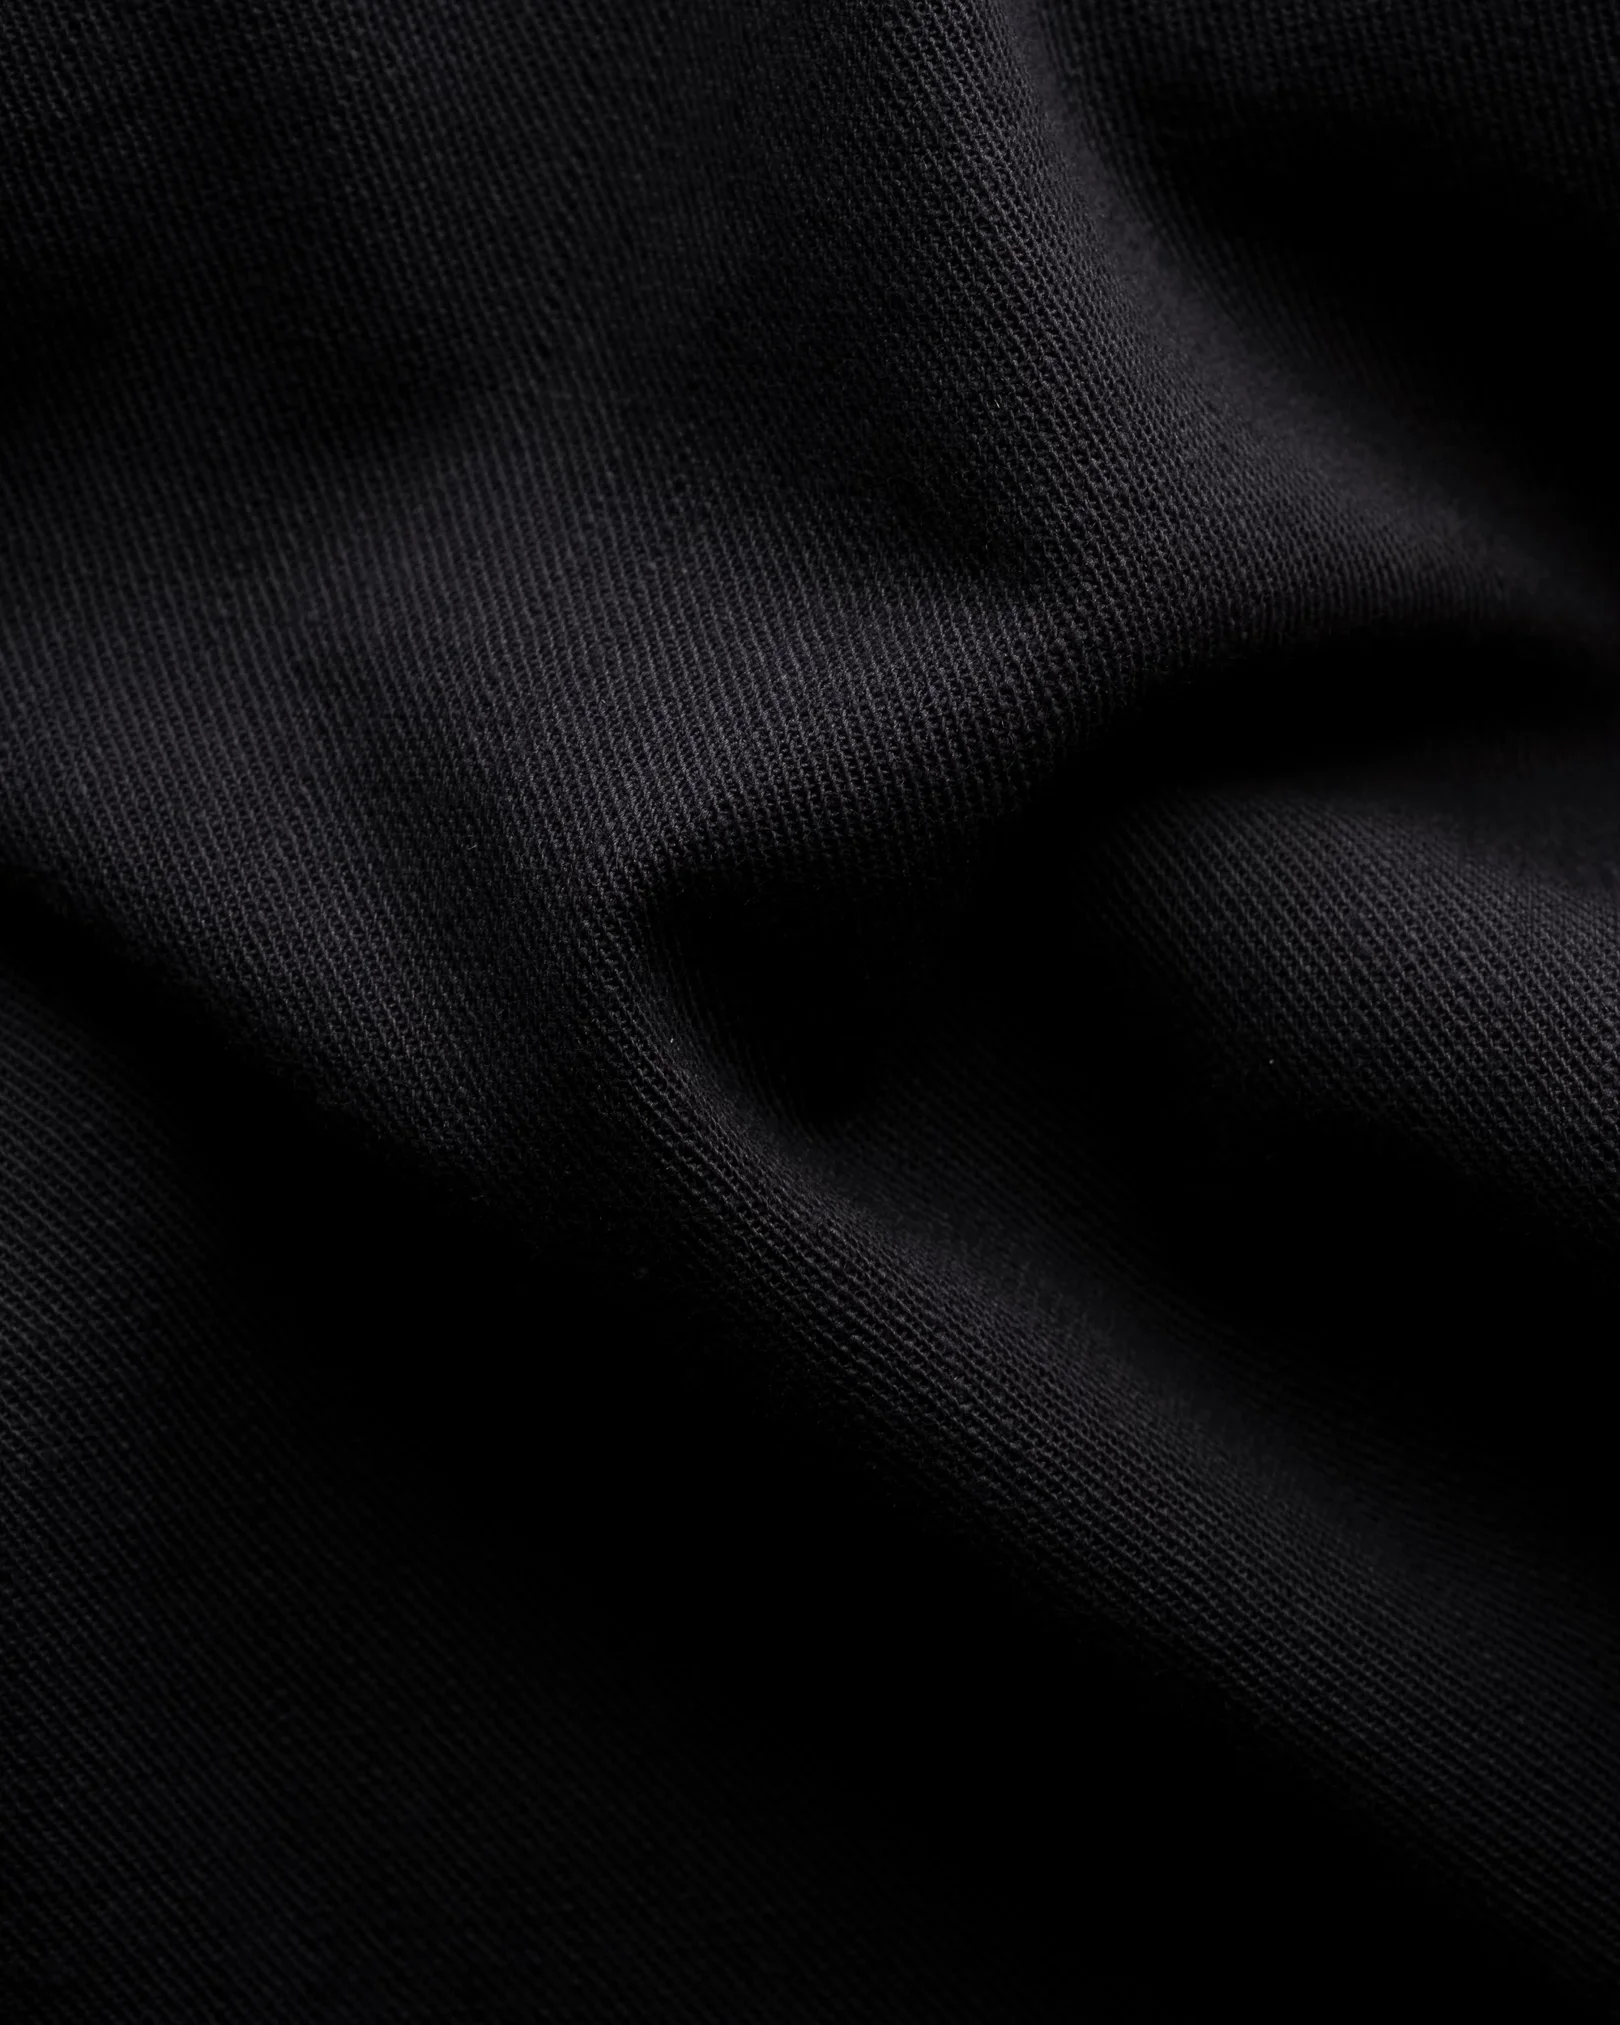 Eton - black indigo wide spread shirt